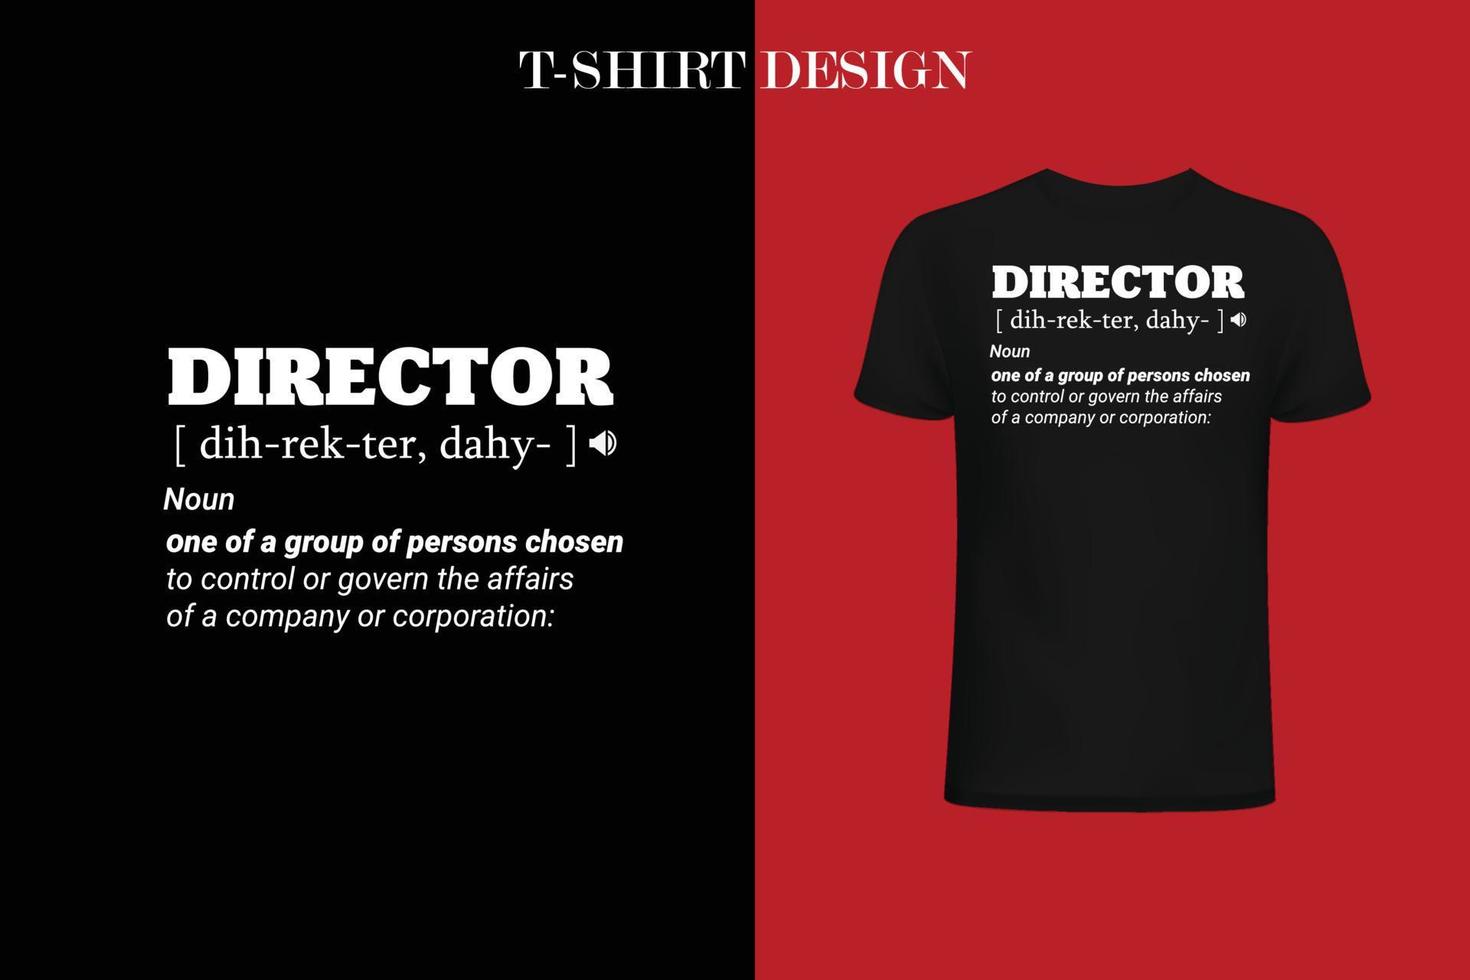 director definition t-shirt vektor